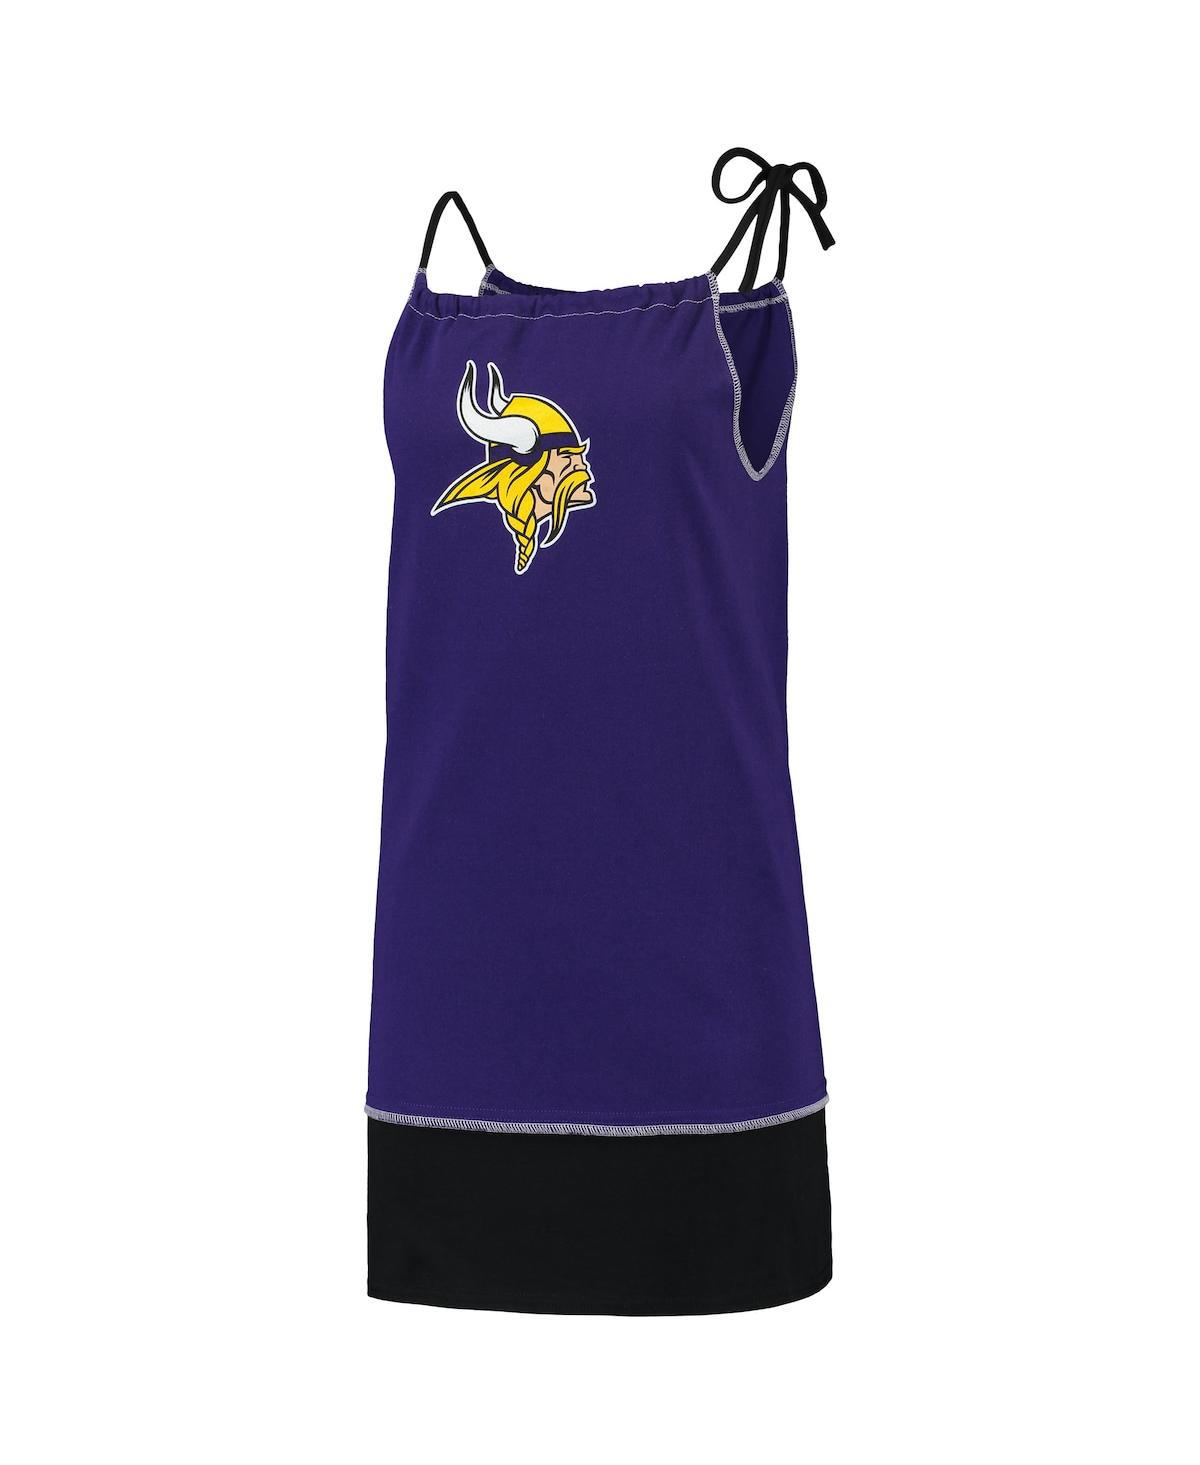 Women's Refried Apparel Purple Distressed Minnesota Vikings Vintage-Like Tank Dress - Purple